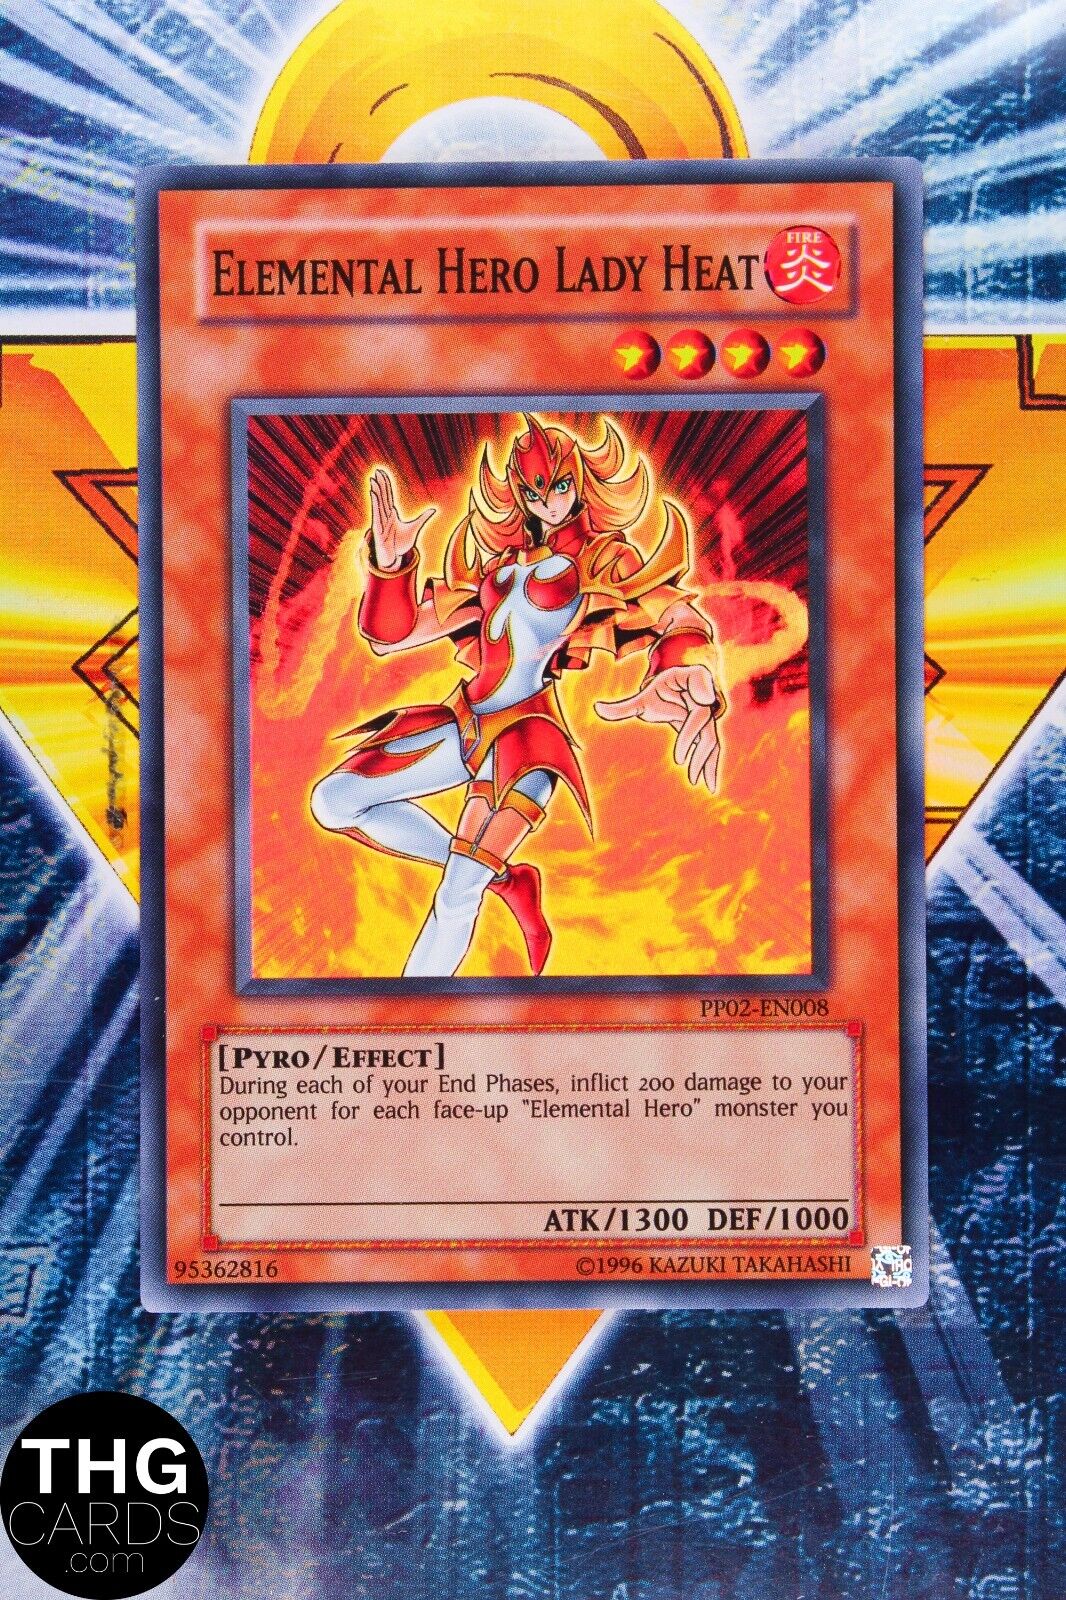 Elemental Hero Lady Heat PP02-EN008 Super Rare Yugioh Card